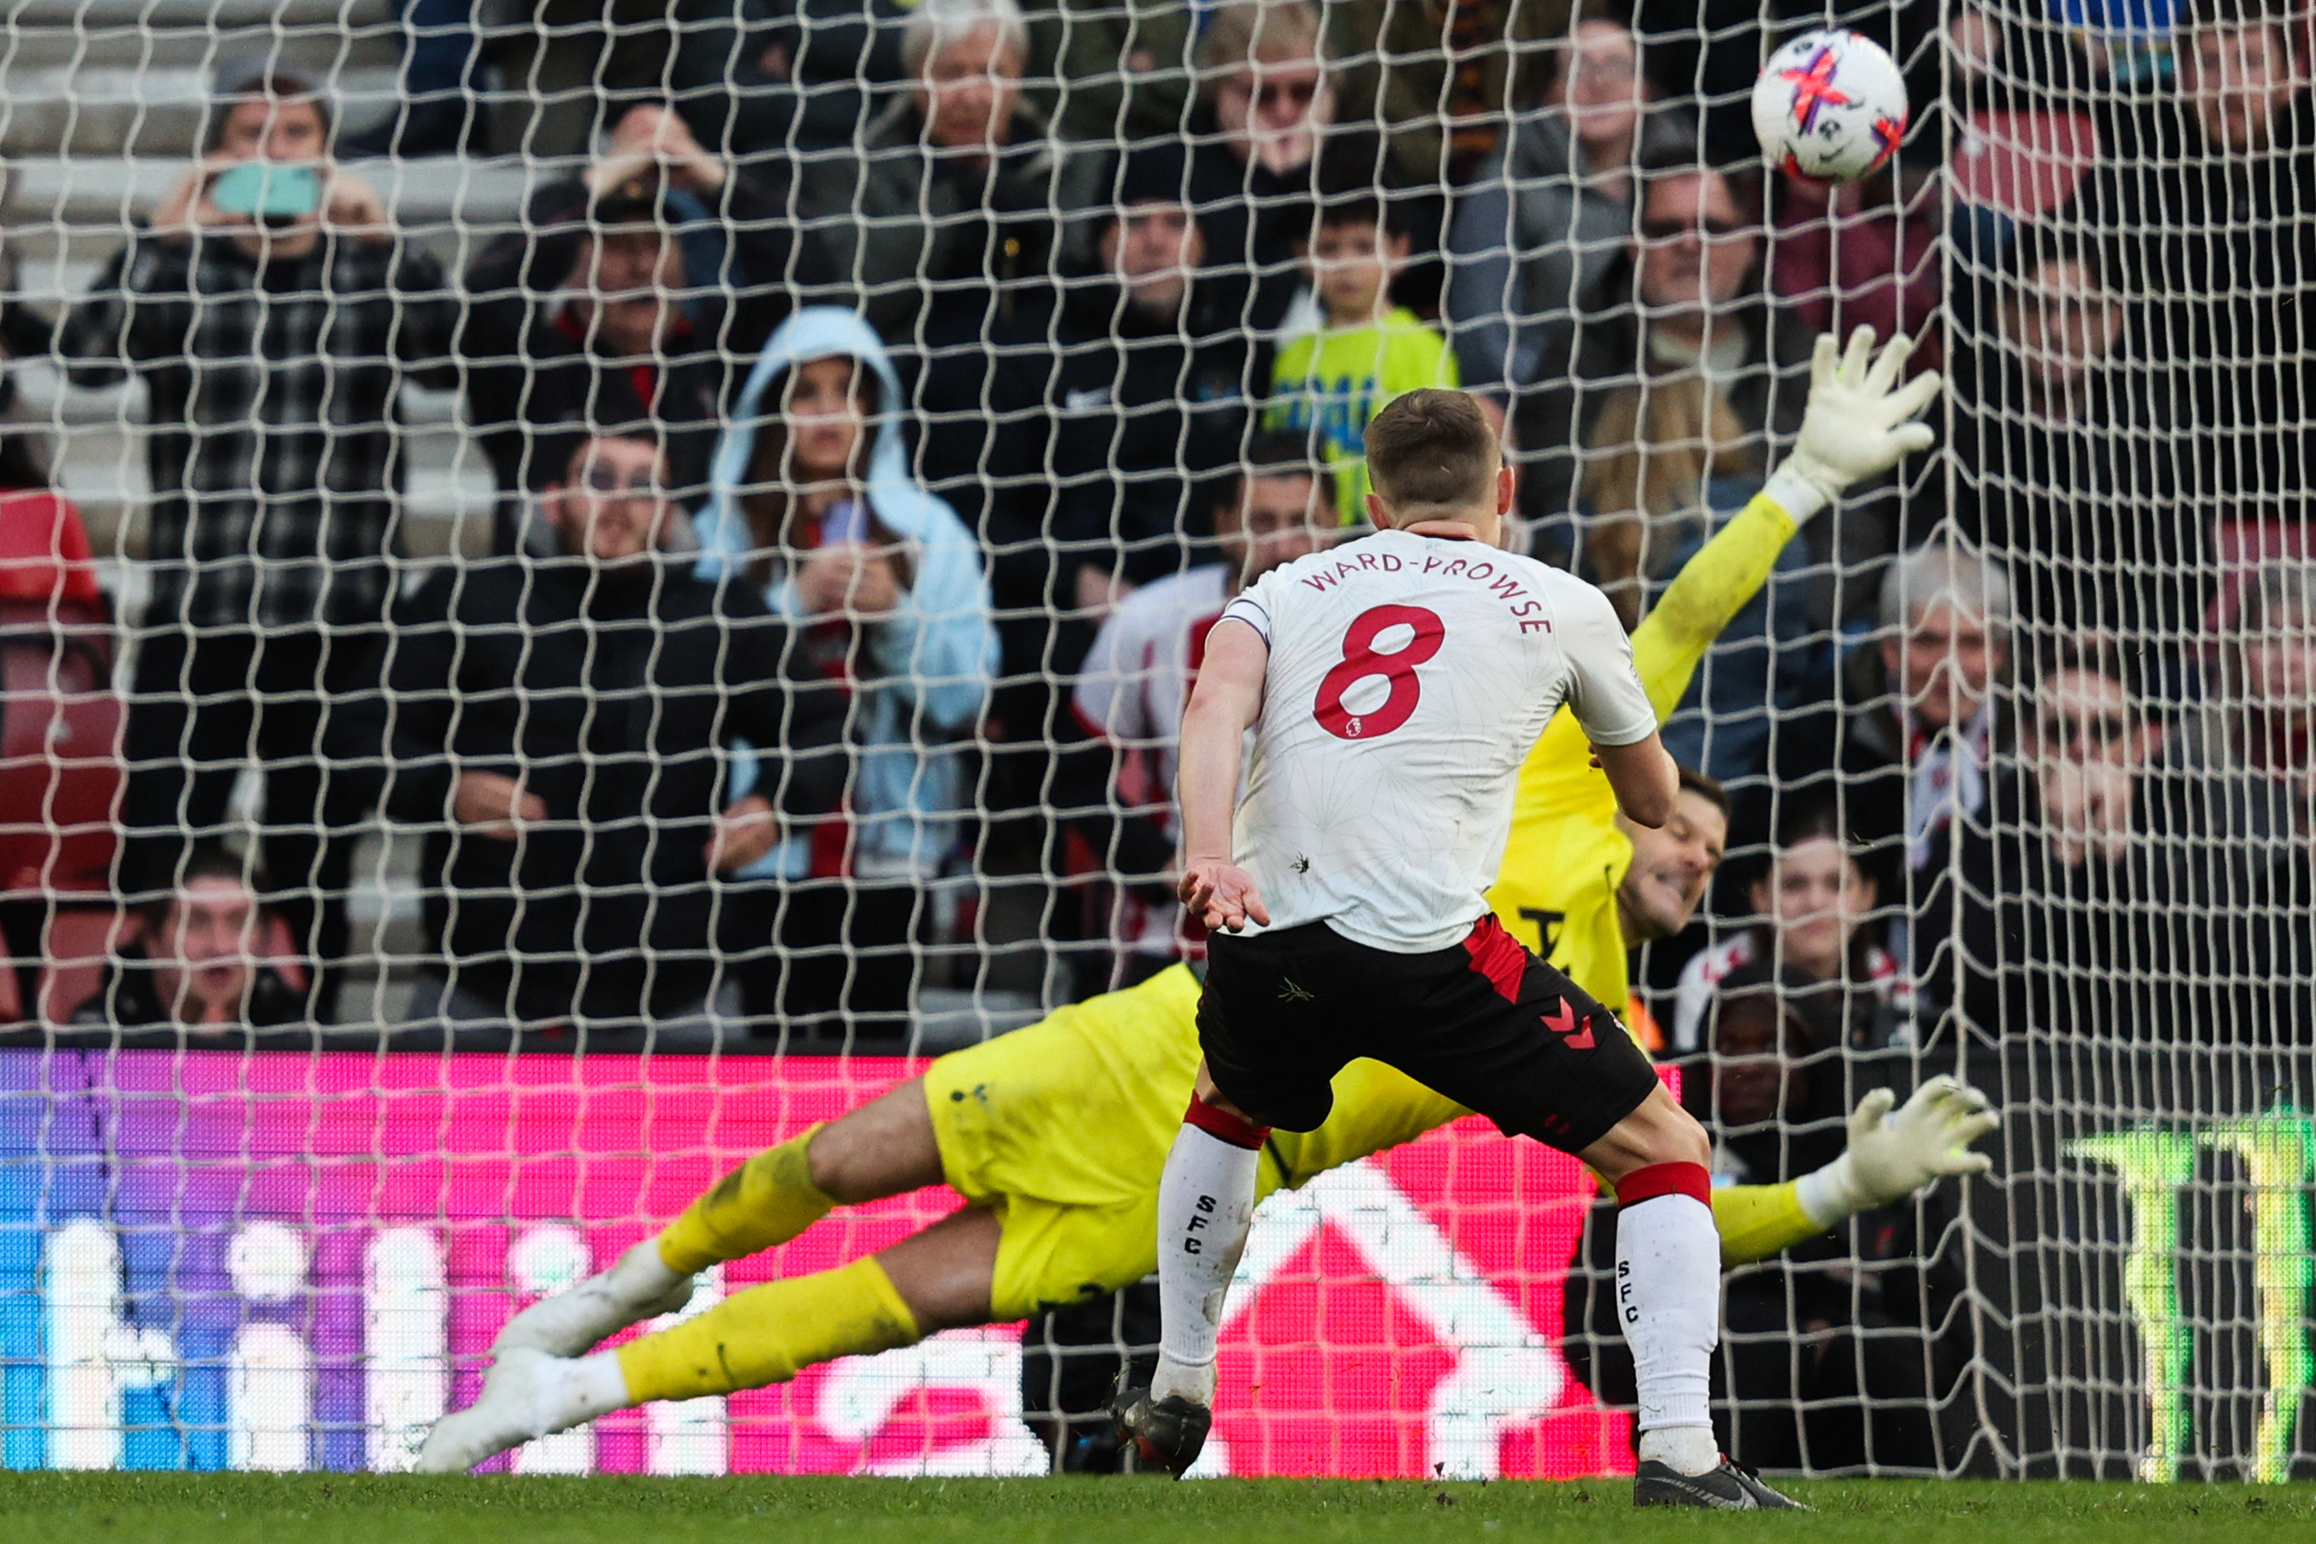 Southampton's English midfielder James Ward-Prowse shoots a penalty kick past Tottenham Hotspur's Fraser Forster.